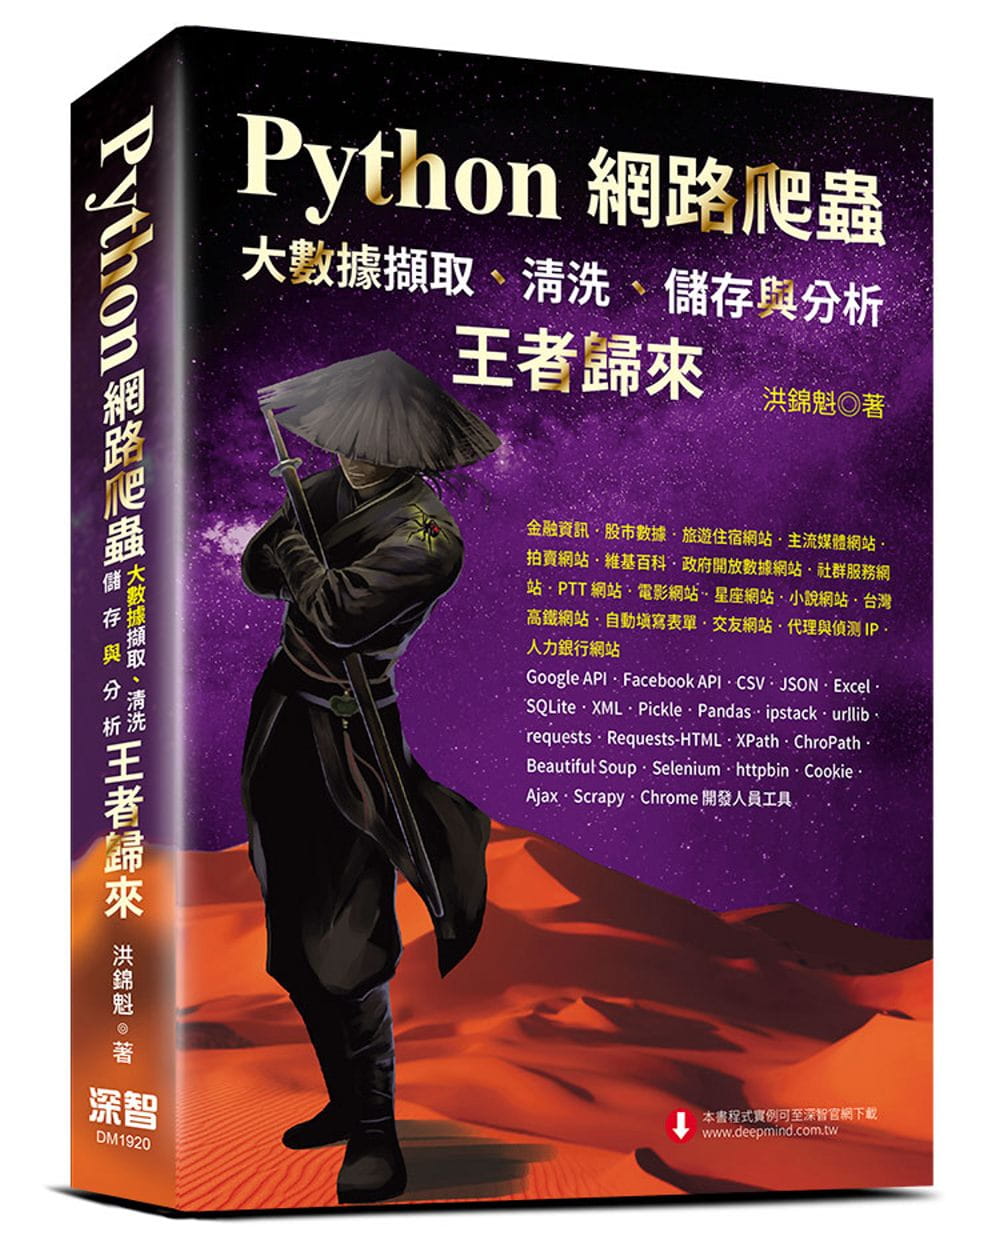 Python 爬蟲應用 完整案例推薦書